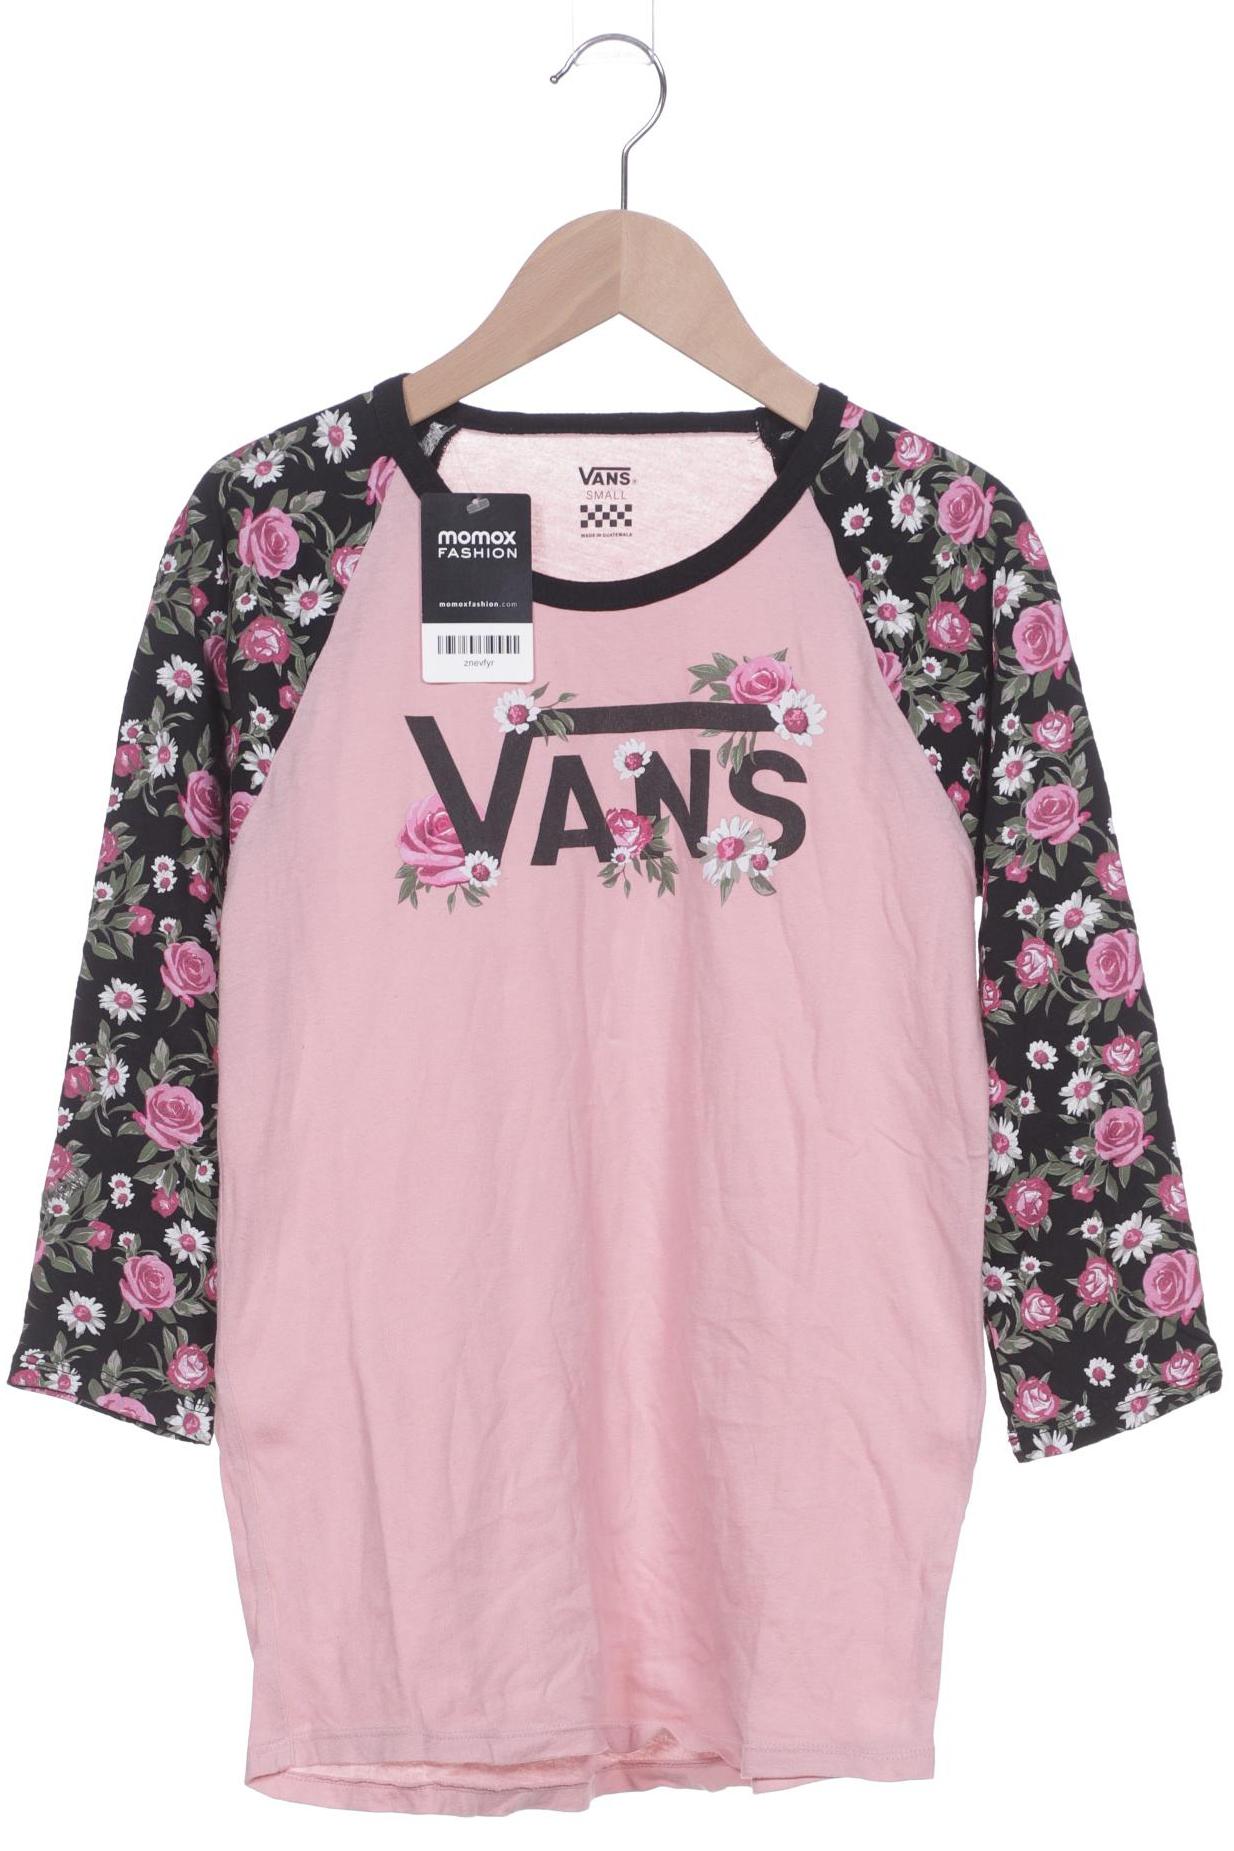 VANS Damen Langarmshirt, pink von Vans